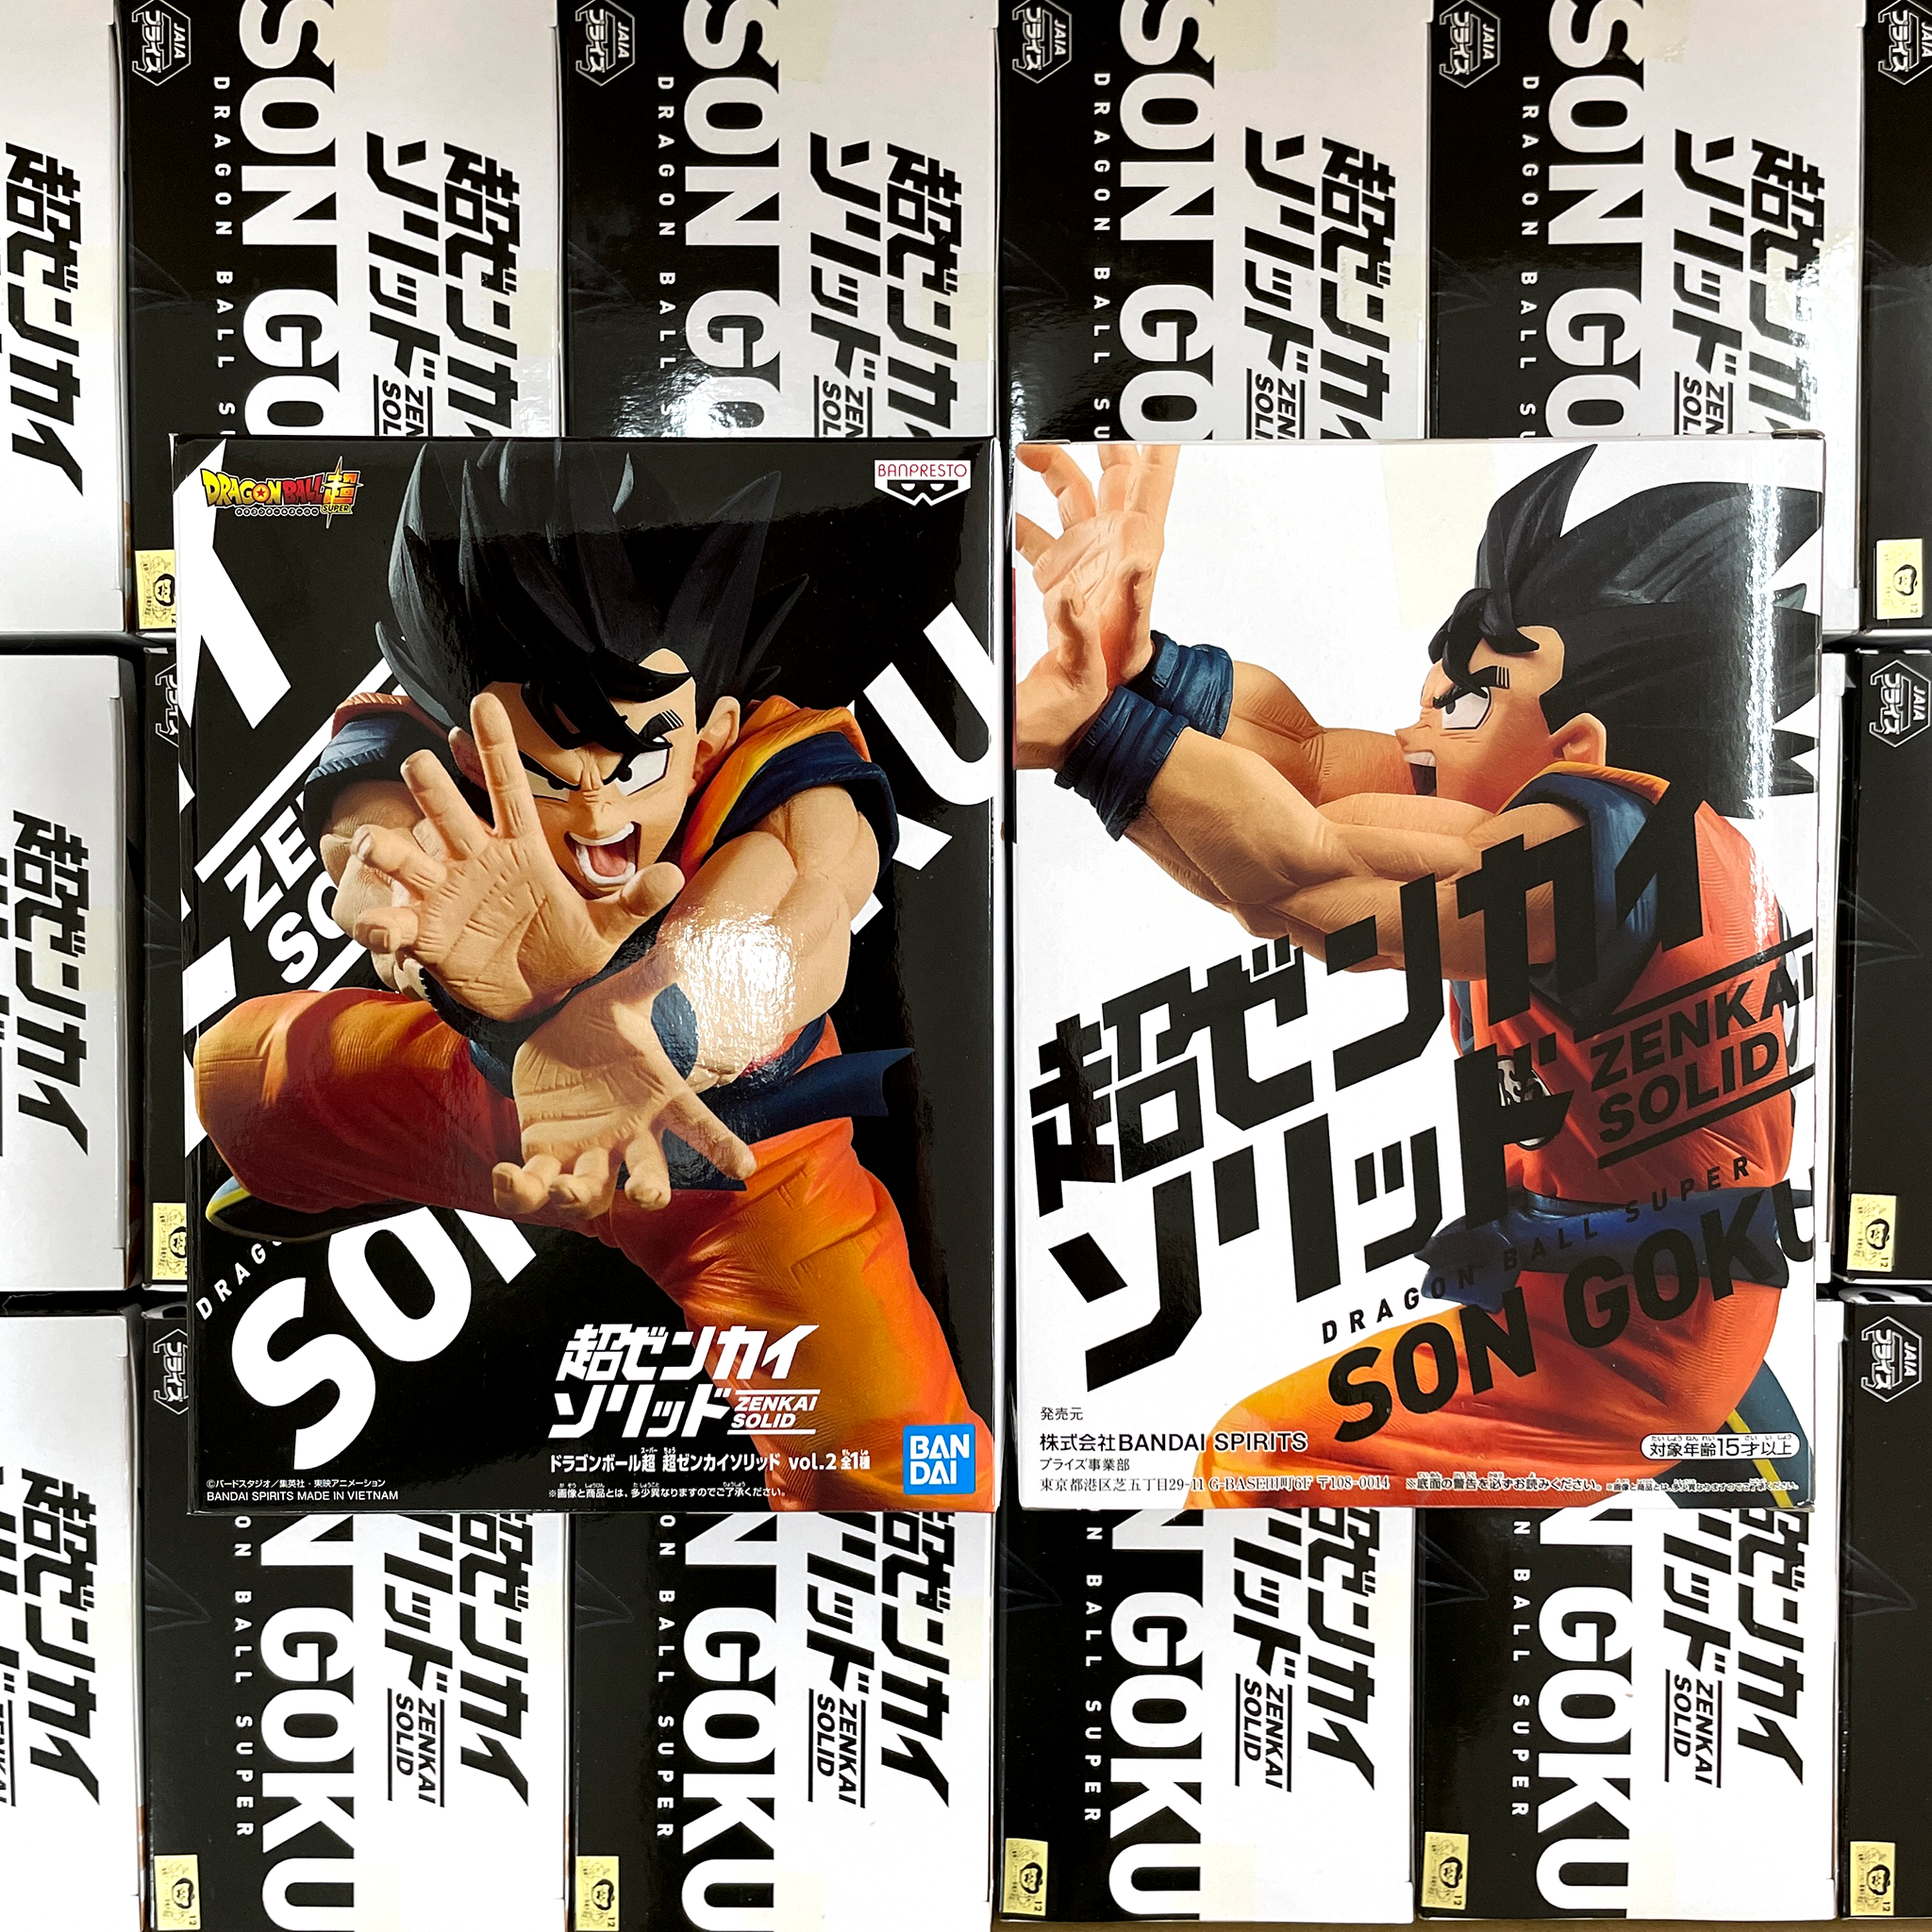 Dragon Ball GT Tag Fighters Super Saiyan 4 Goku